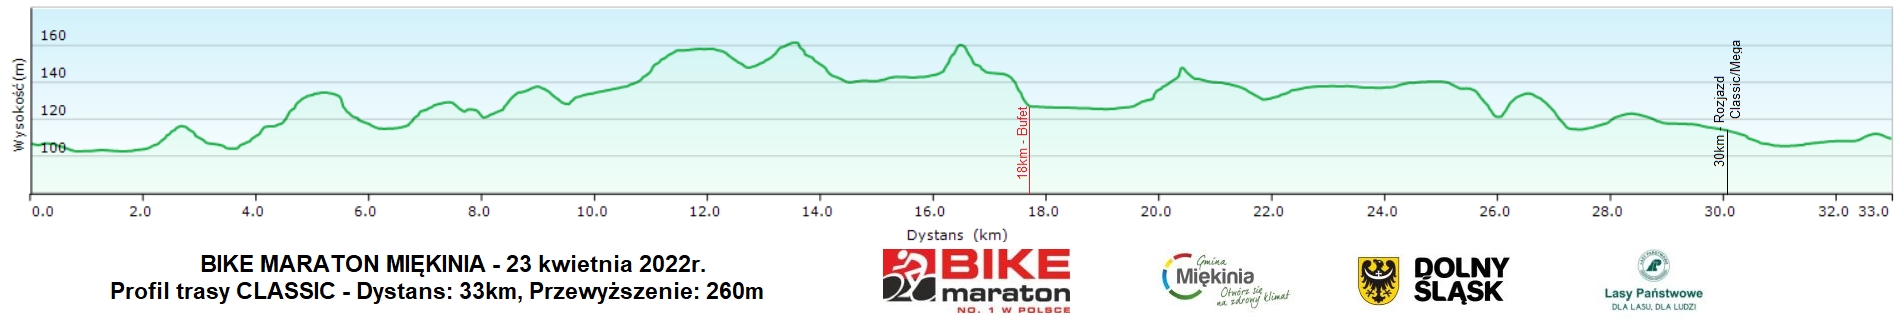 bike-maraton-2022-miekinia-profil-trasy-classic